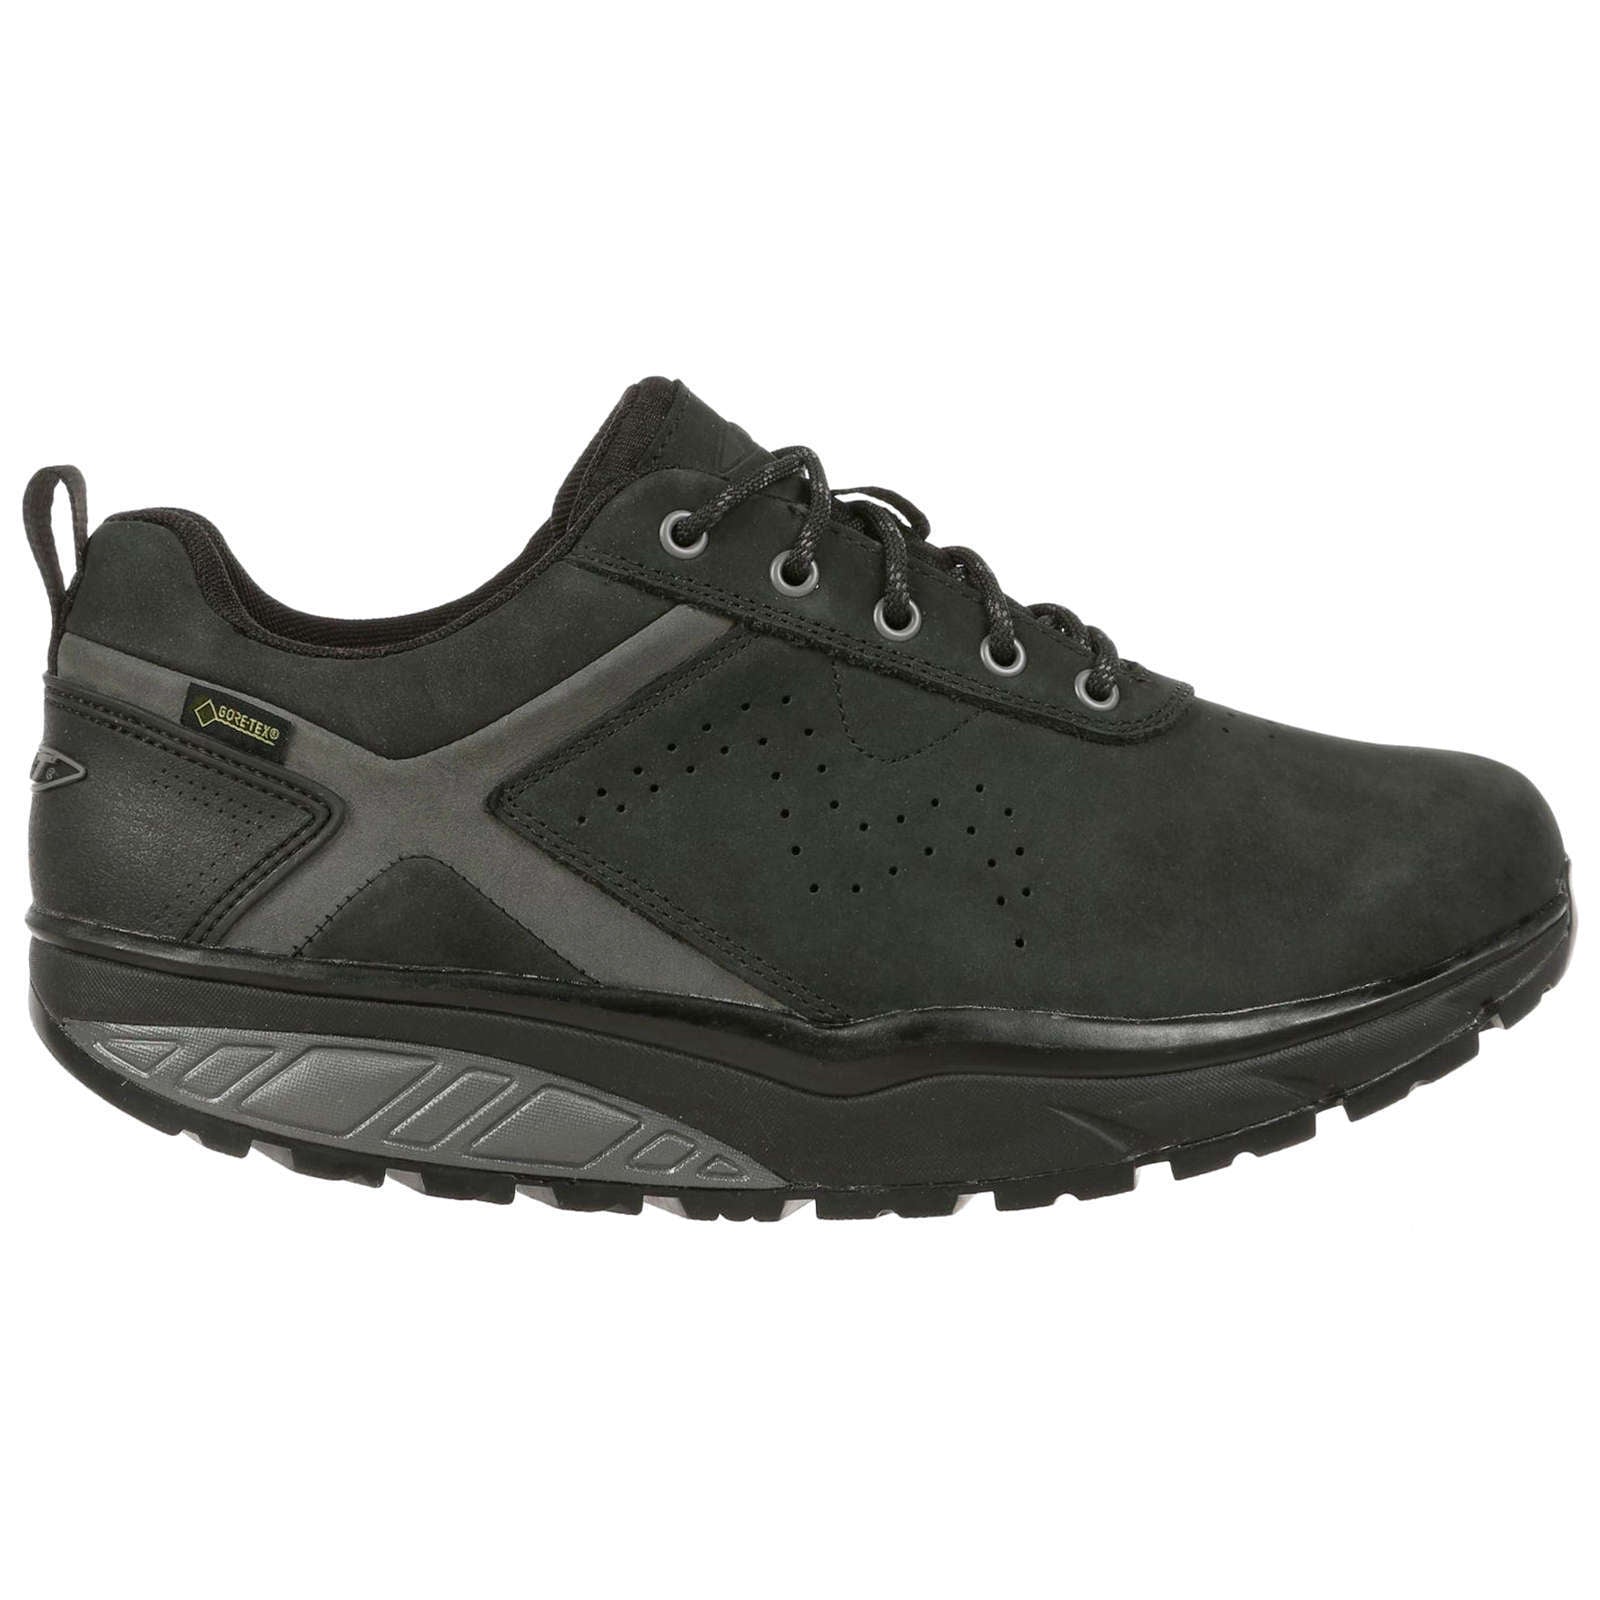 MBT Kibo GTX Waterproof Nubuck Leather Men's Hiking Shoes#color_black